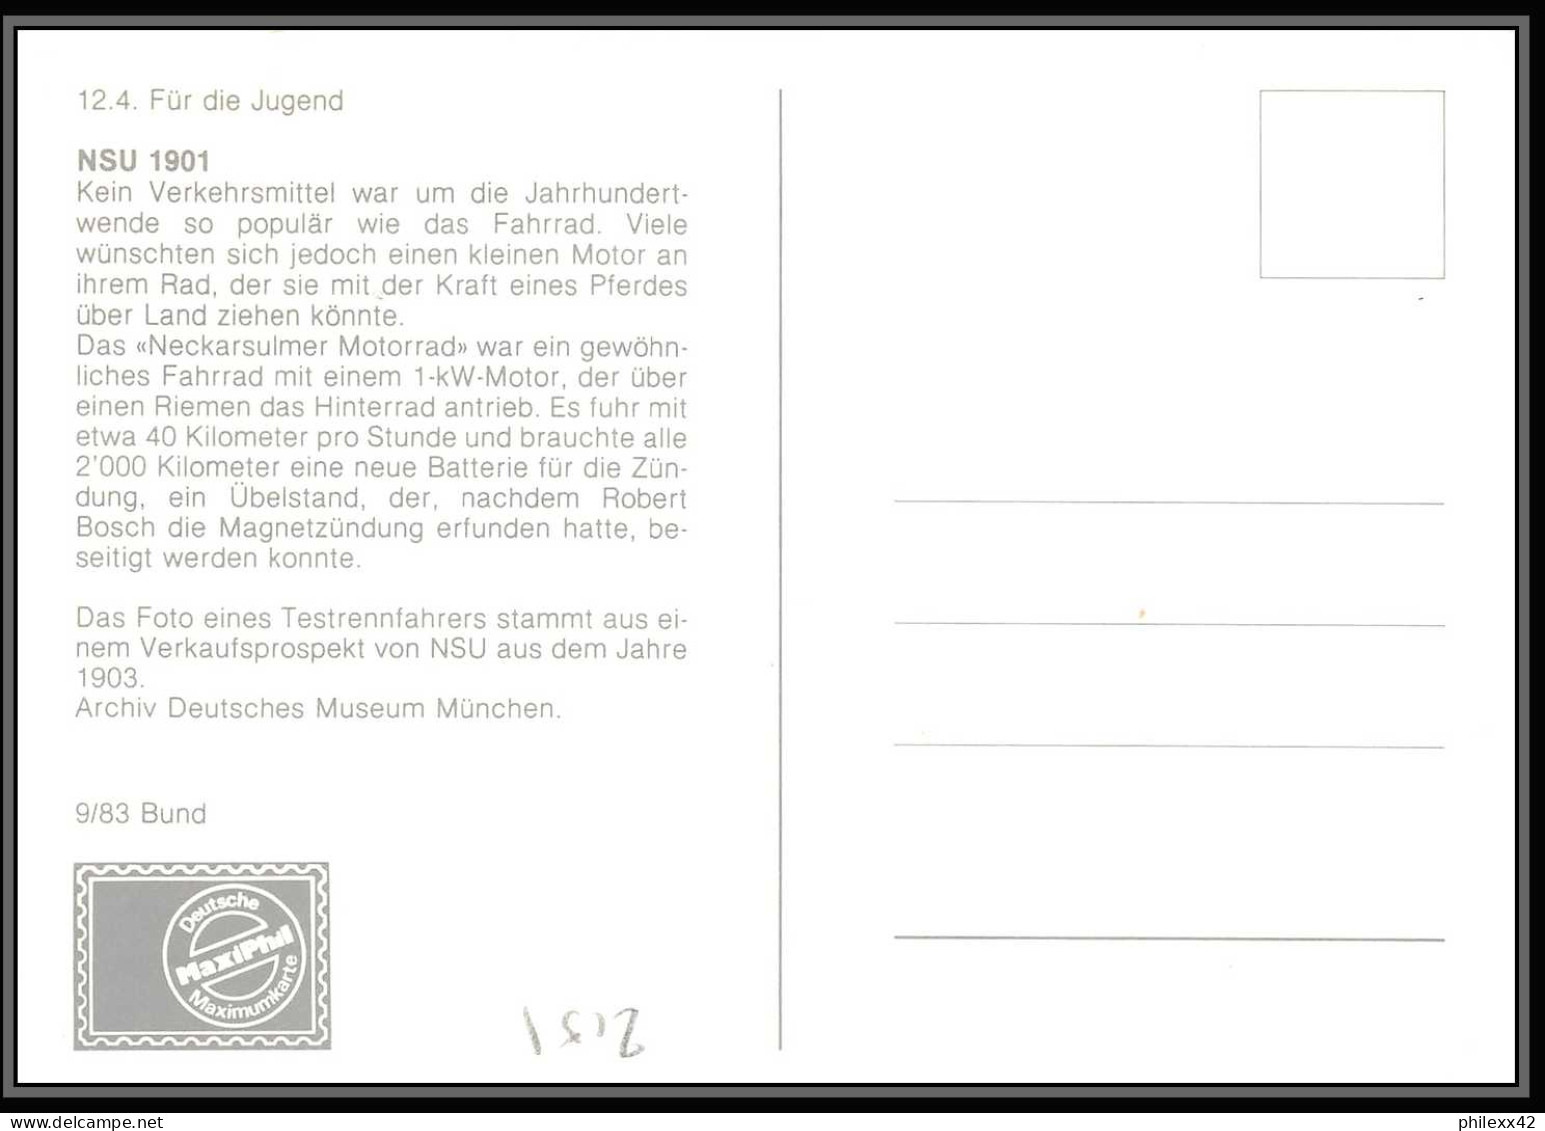 Allemagne (germany) - Carte maximum (card) 2151 moto  bonn 1993 fur die jugend lot 4 cartes